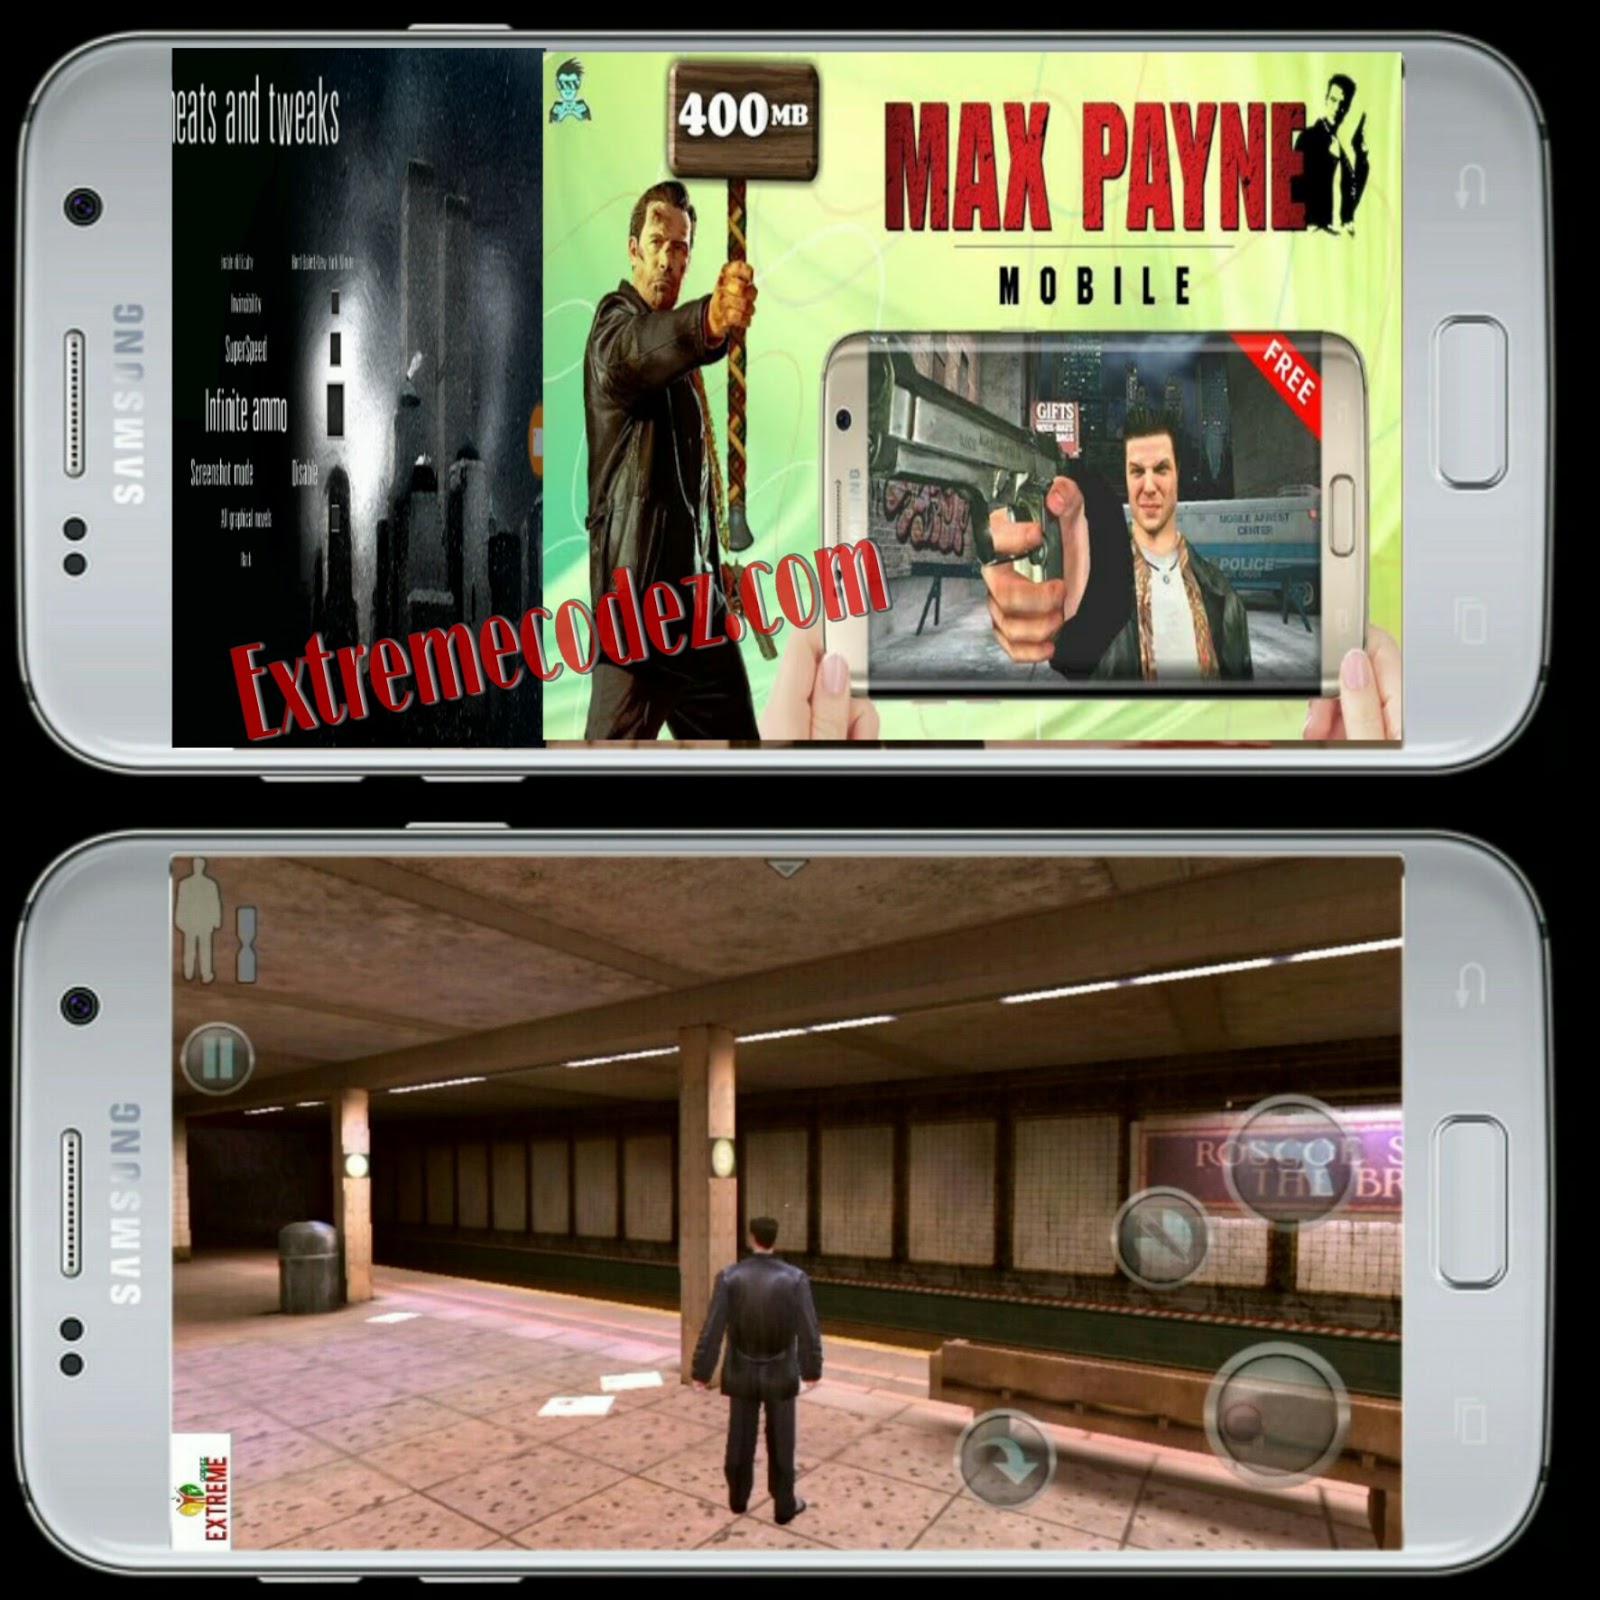 Max payne 1 game download